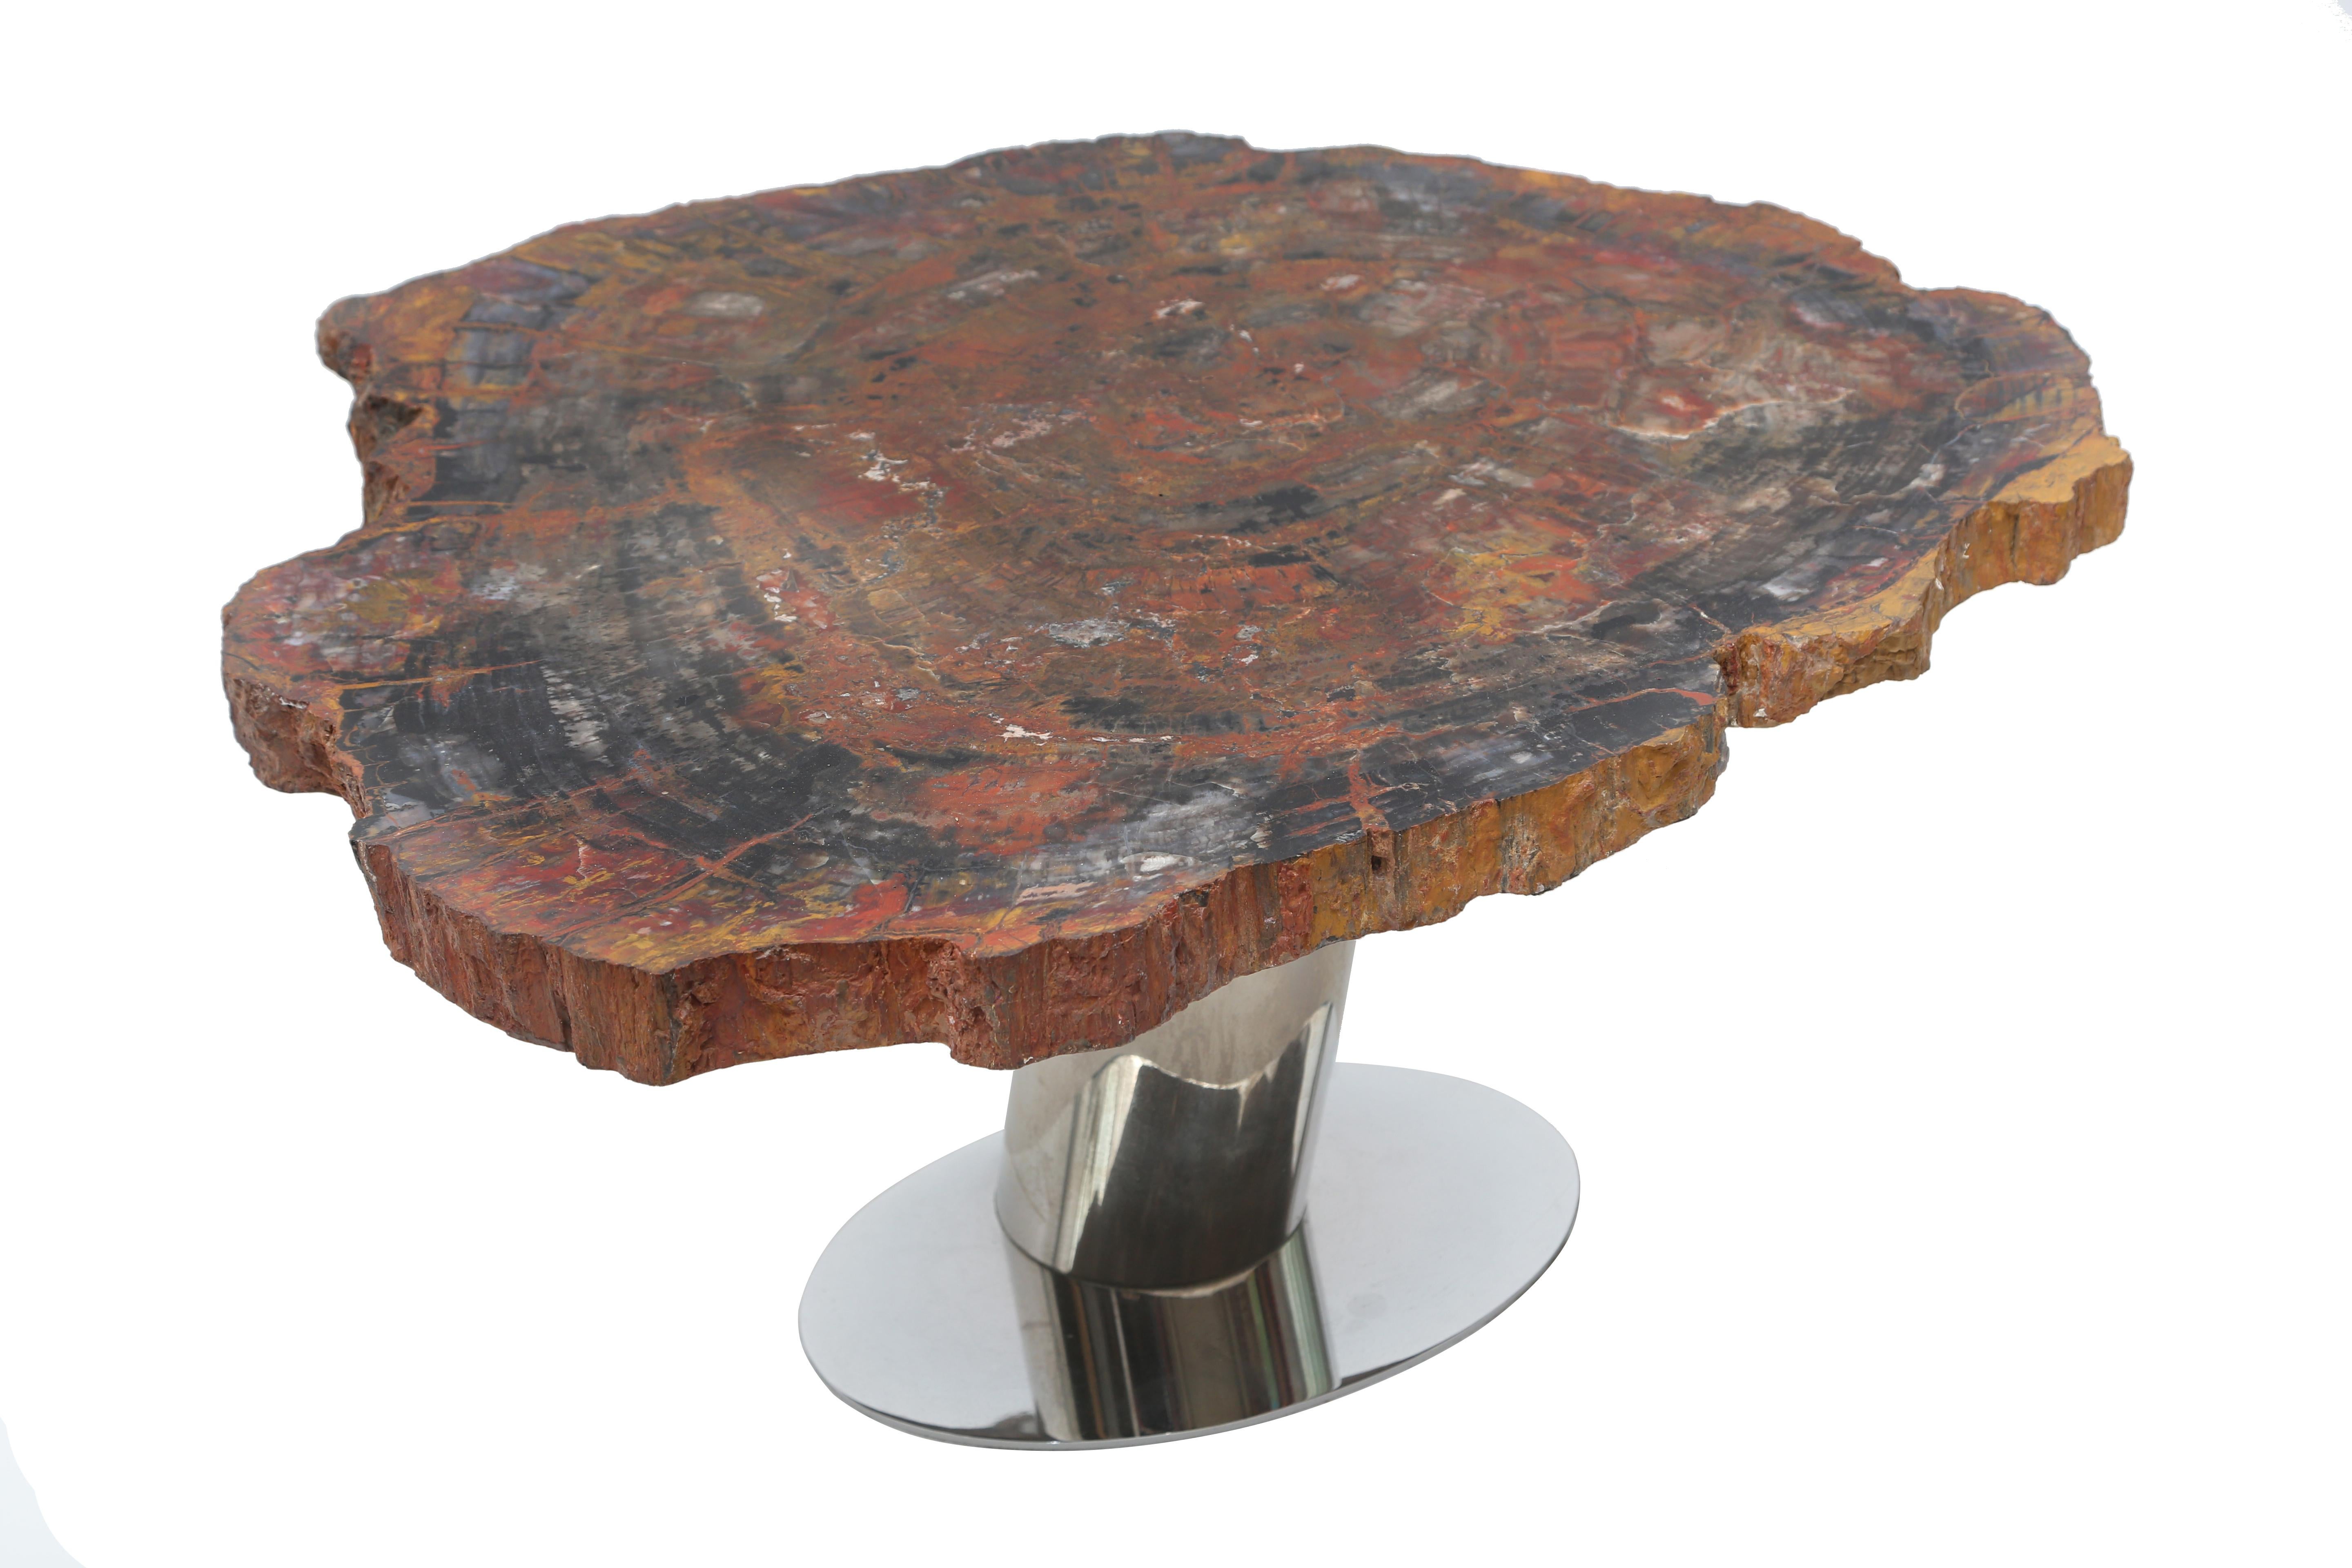 Wonderful rare Karl Springer petrified wood table.
Top sits on an angled stainless steel tubular base.